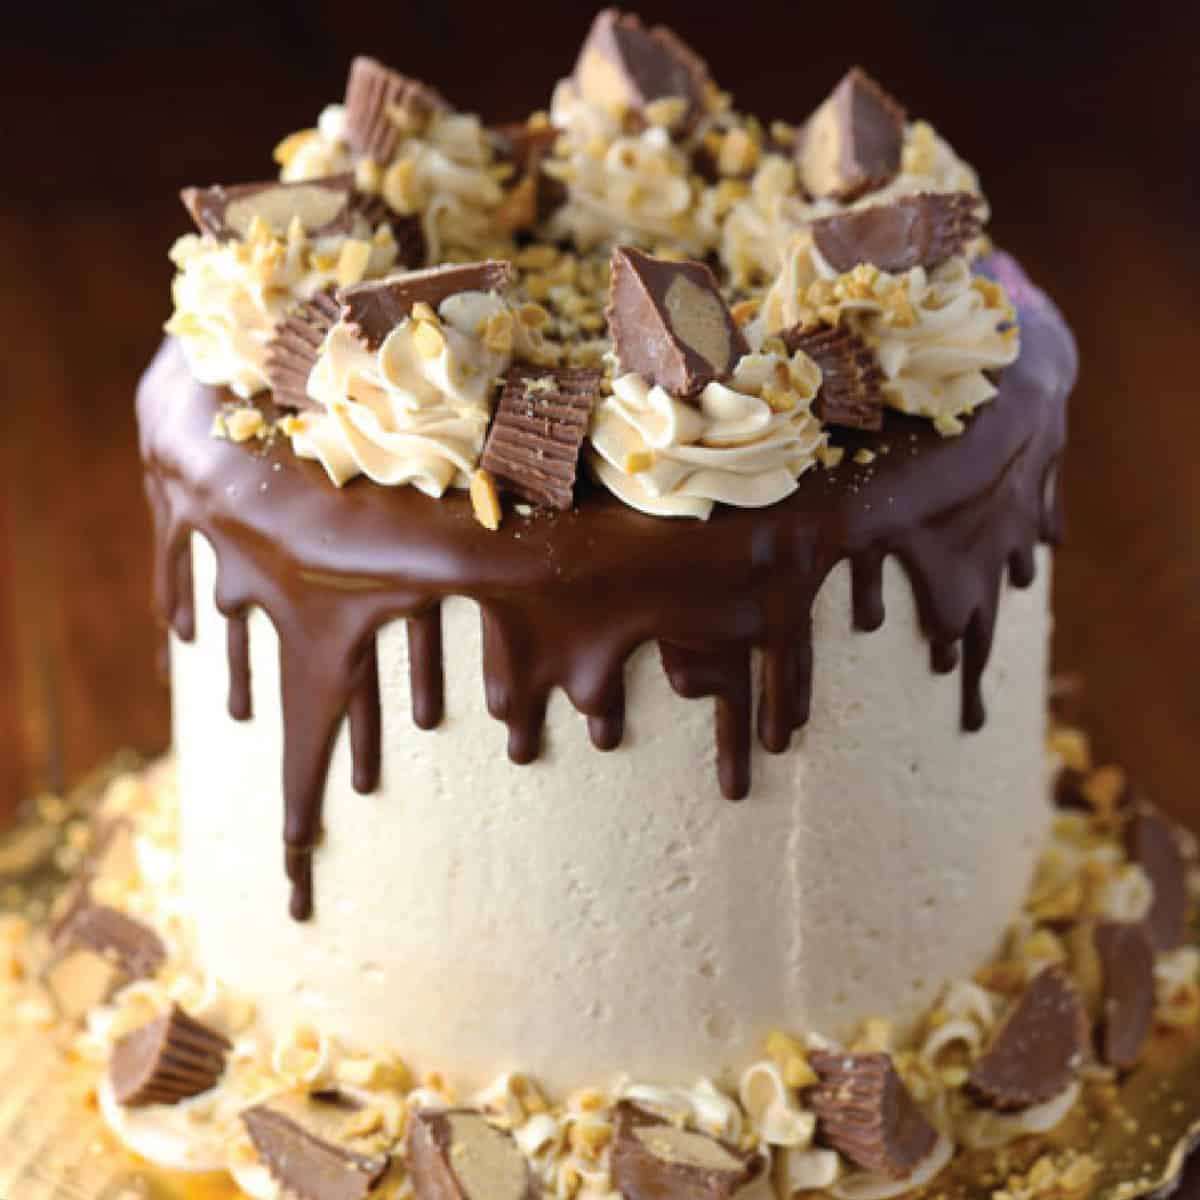 https://www.momlovesbaking.com/wp-content/uploads/2018/04/Chocolate-Peanut-Butter-Drip-Cake.jpg